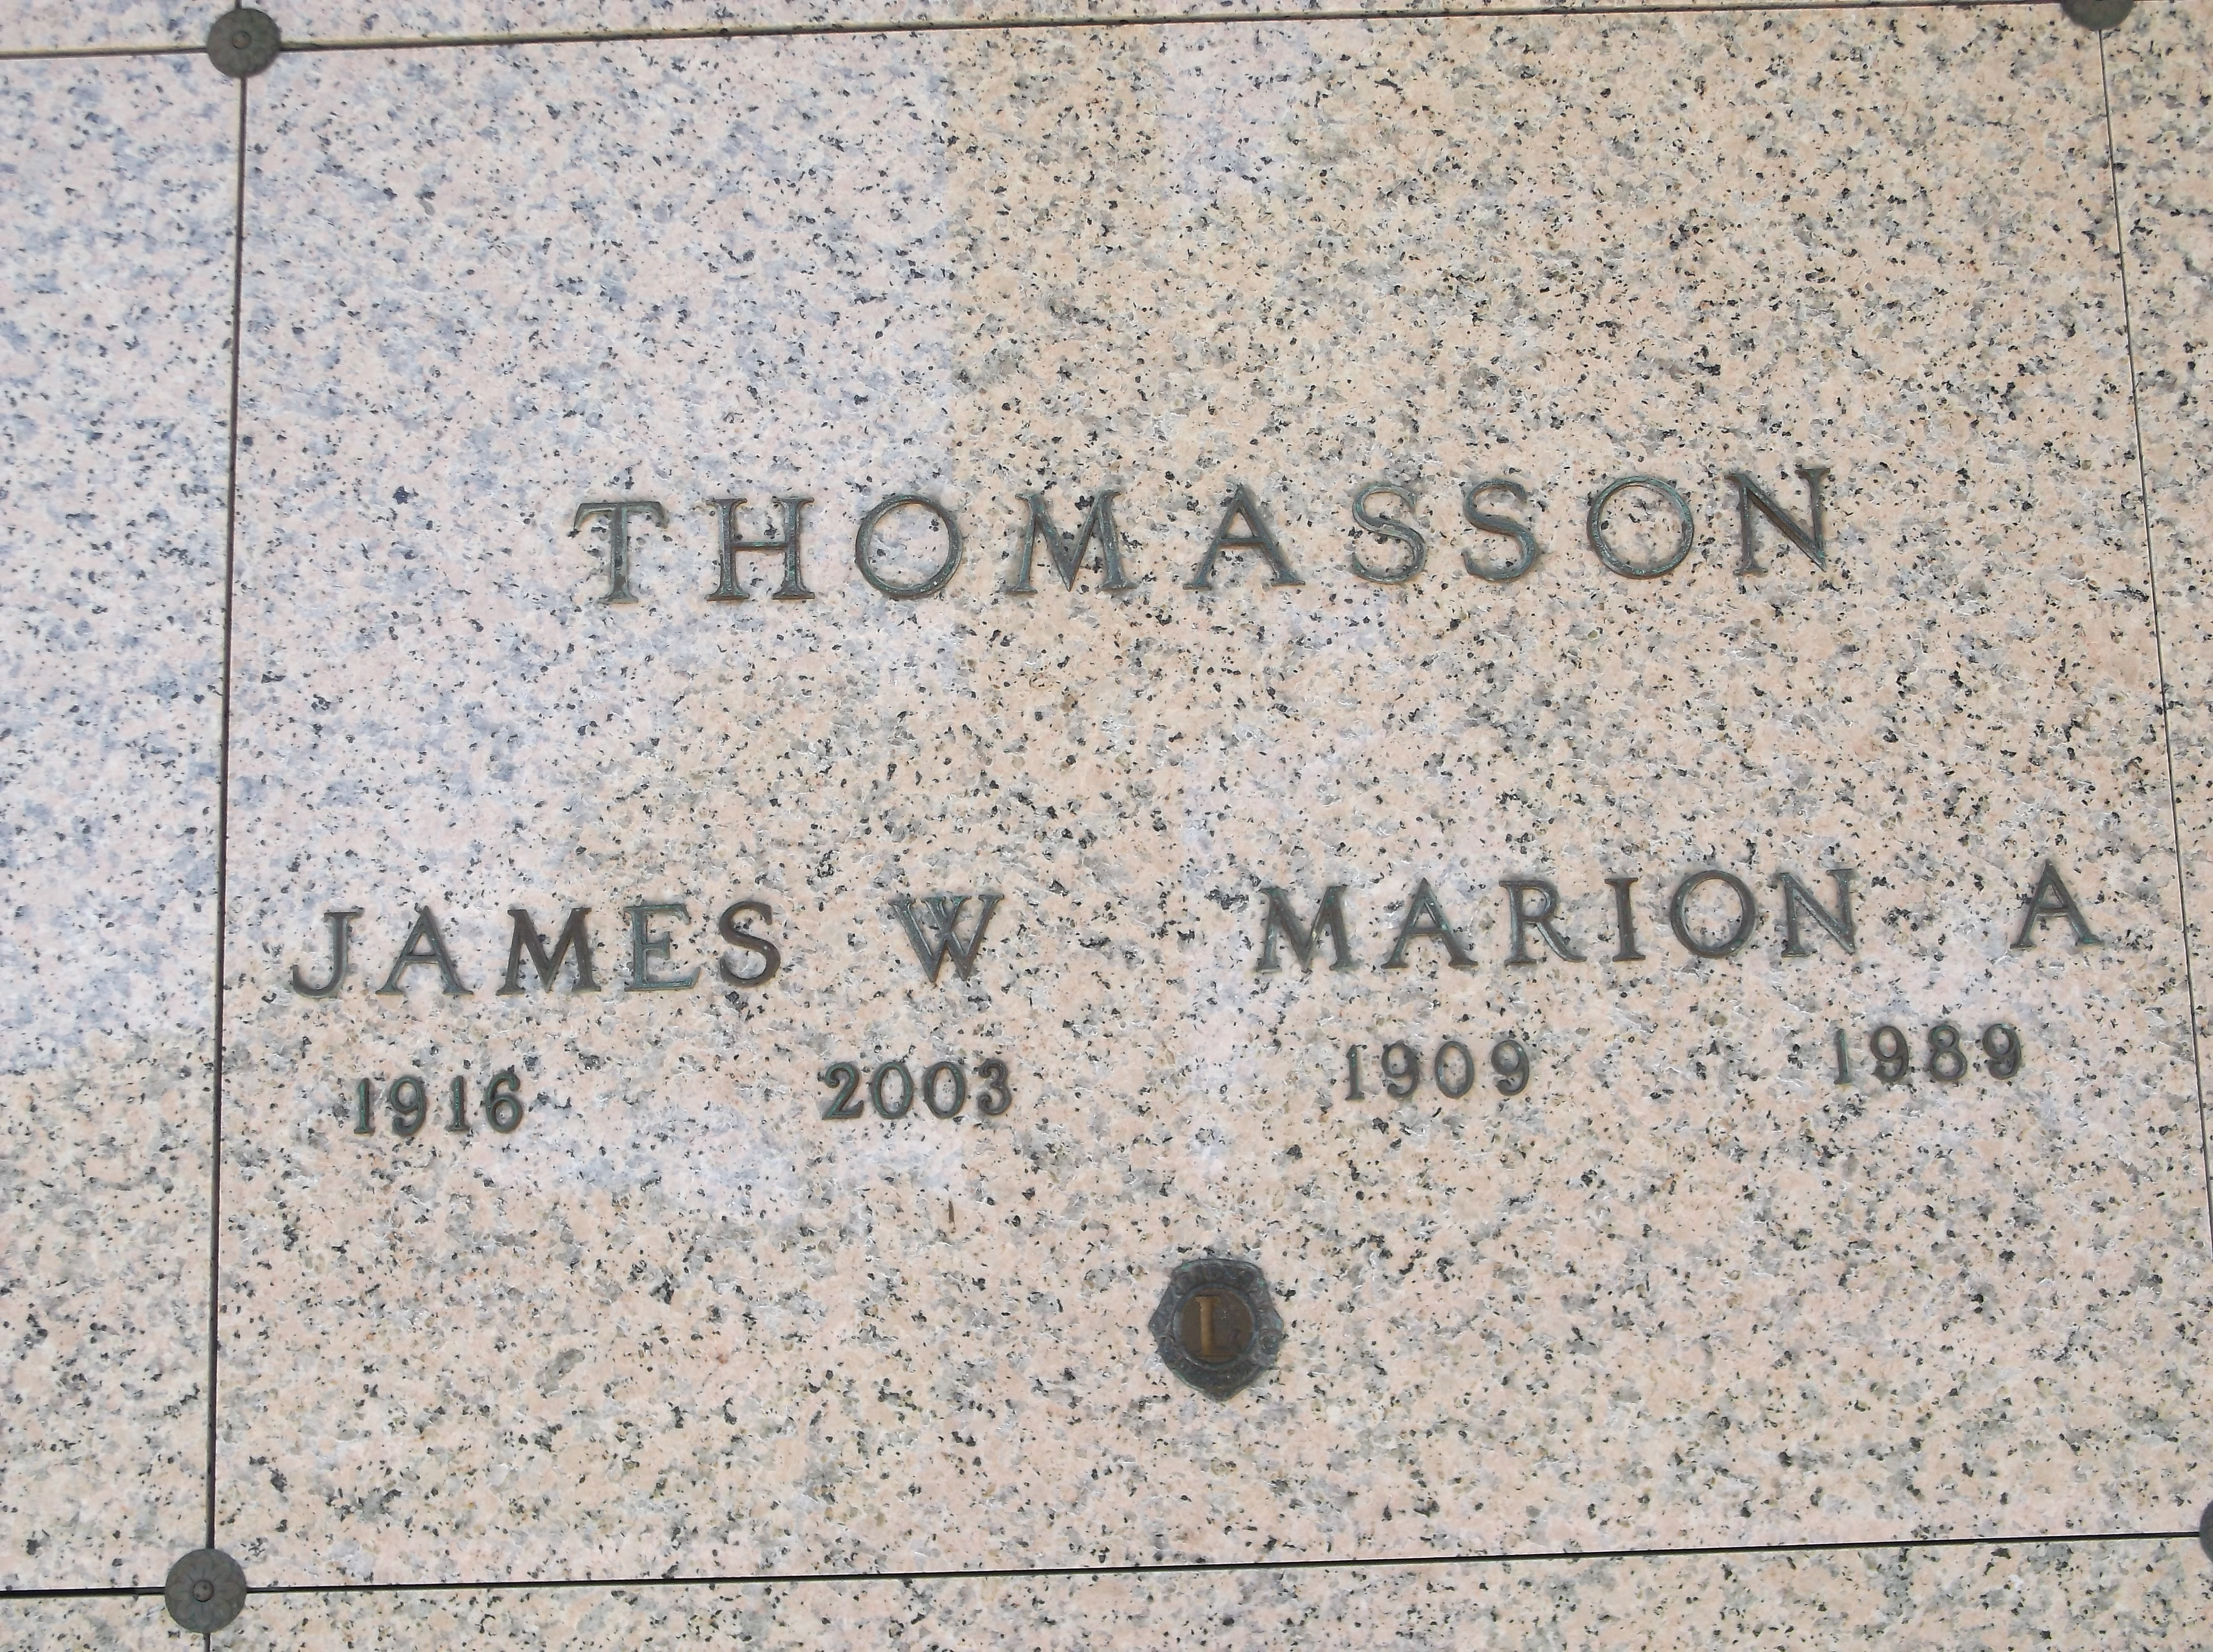 Marion A Thomasson